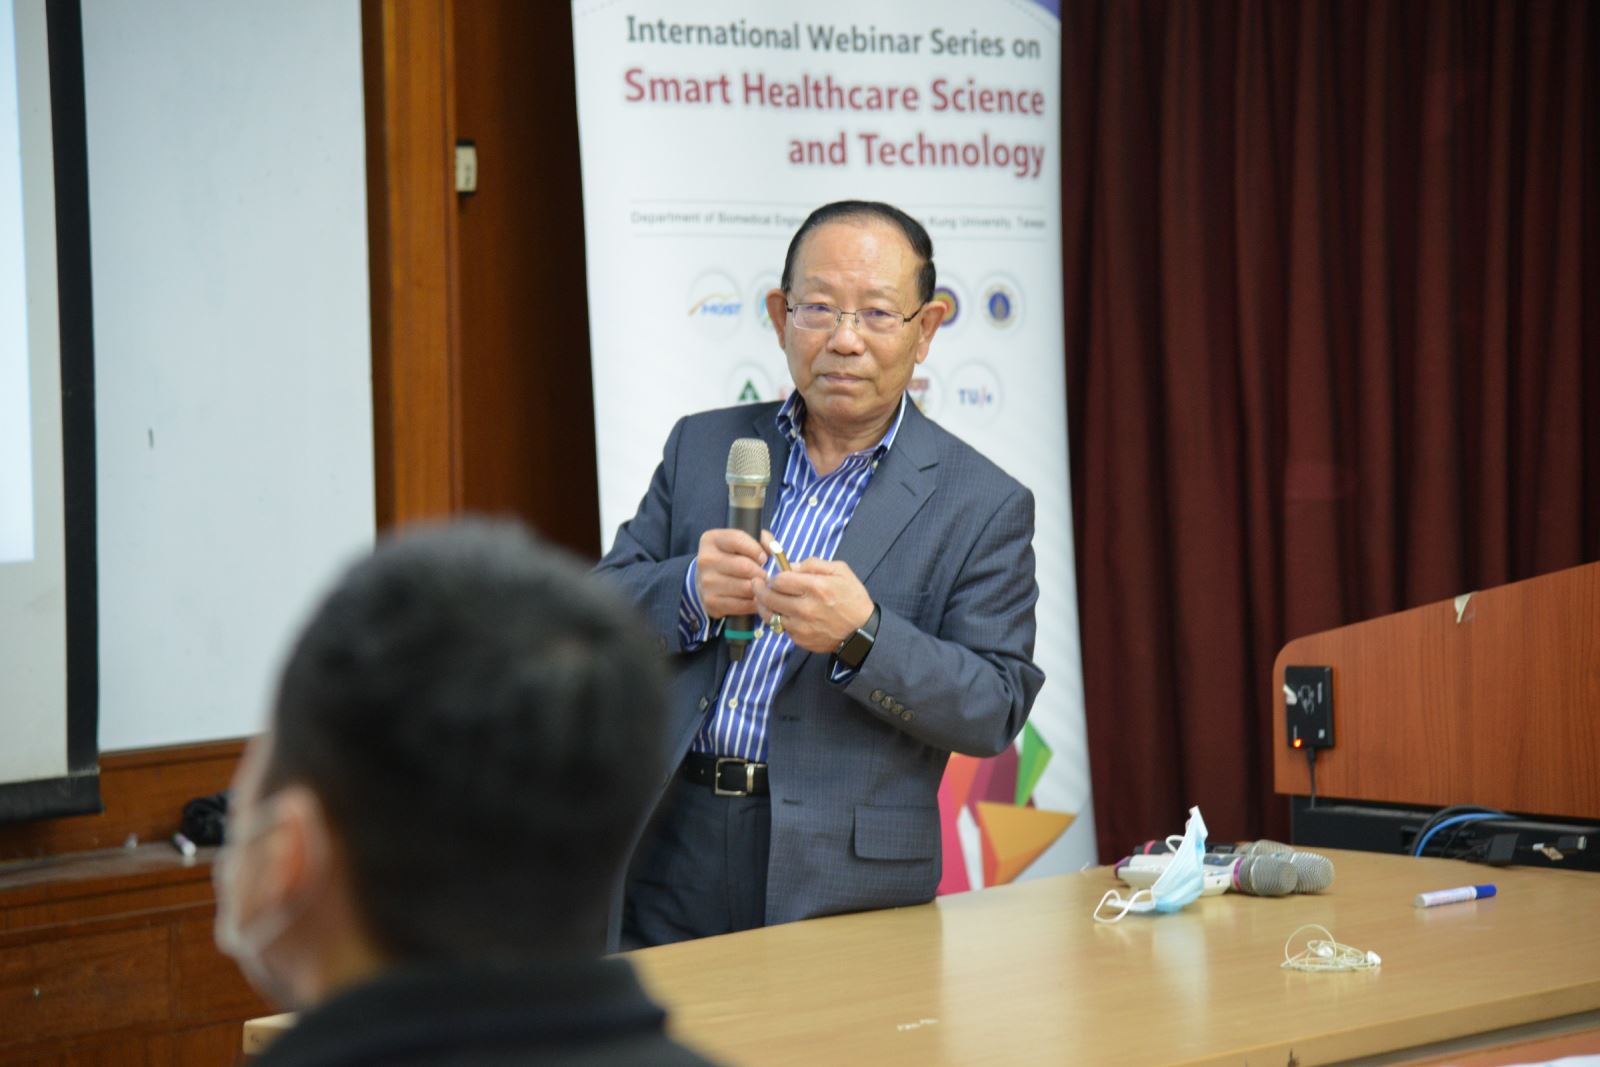 Mr.Lien introduced smart healthcare innovation strategies